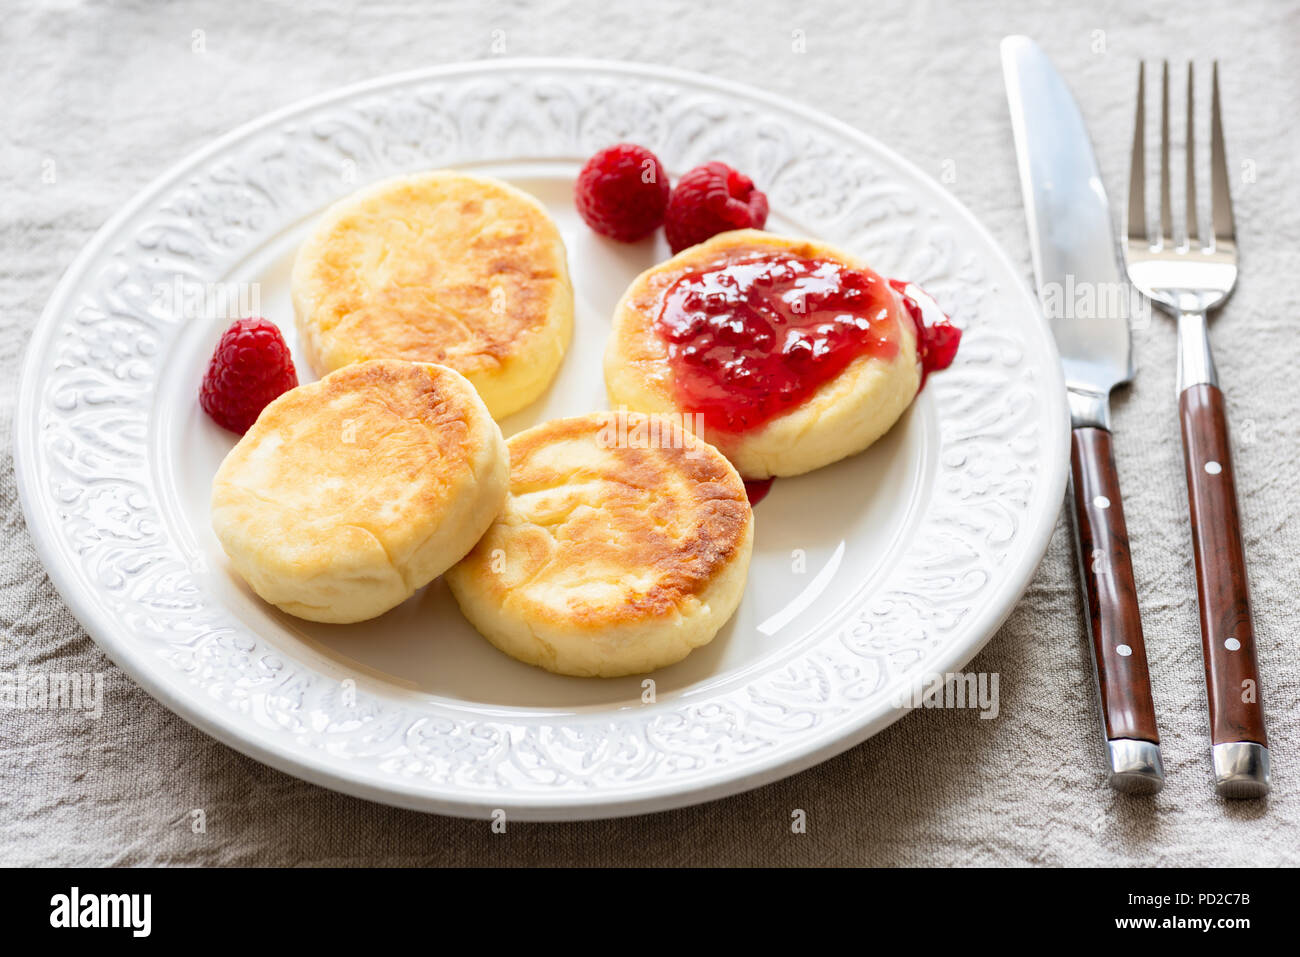 Requesón panqueques o syrniki con mermelada en la placa blanca. Desayuno dulce alimento. Cocina ruso o ucraniano Foto de stock